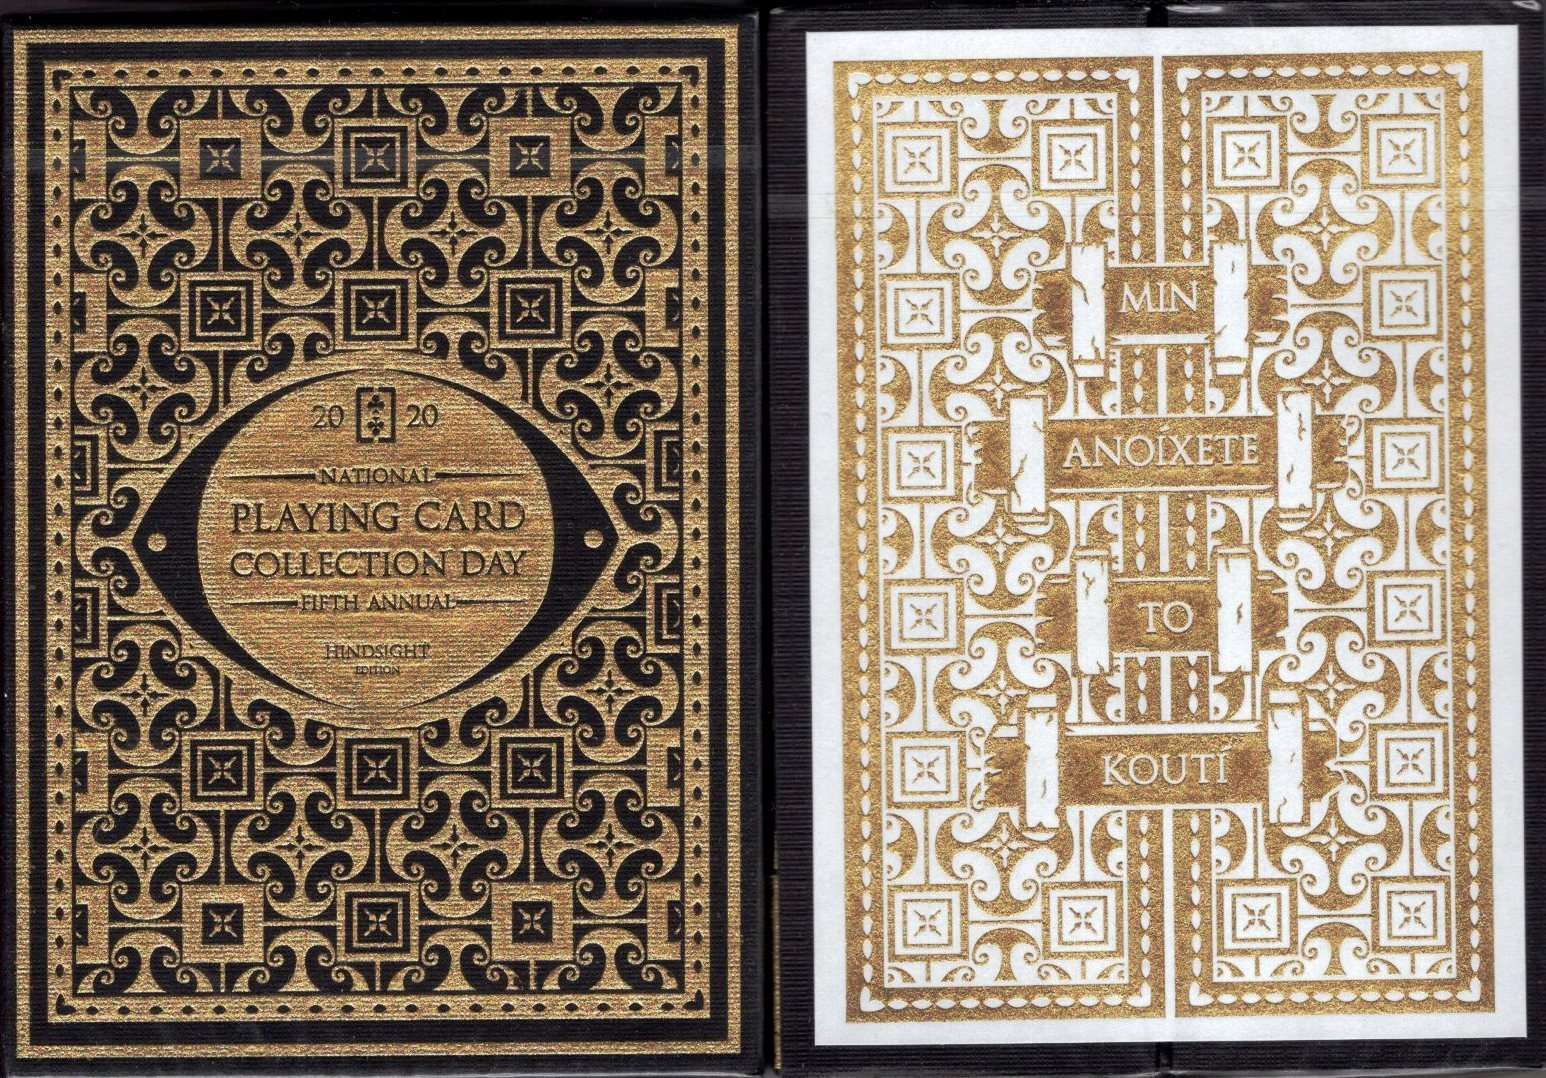 PlayingCardDecks.com-National Playing Card Collection Day 2020 Pandora's Box Gilded Destruction